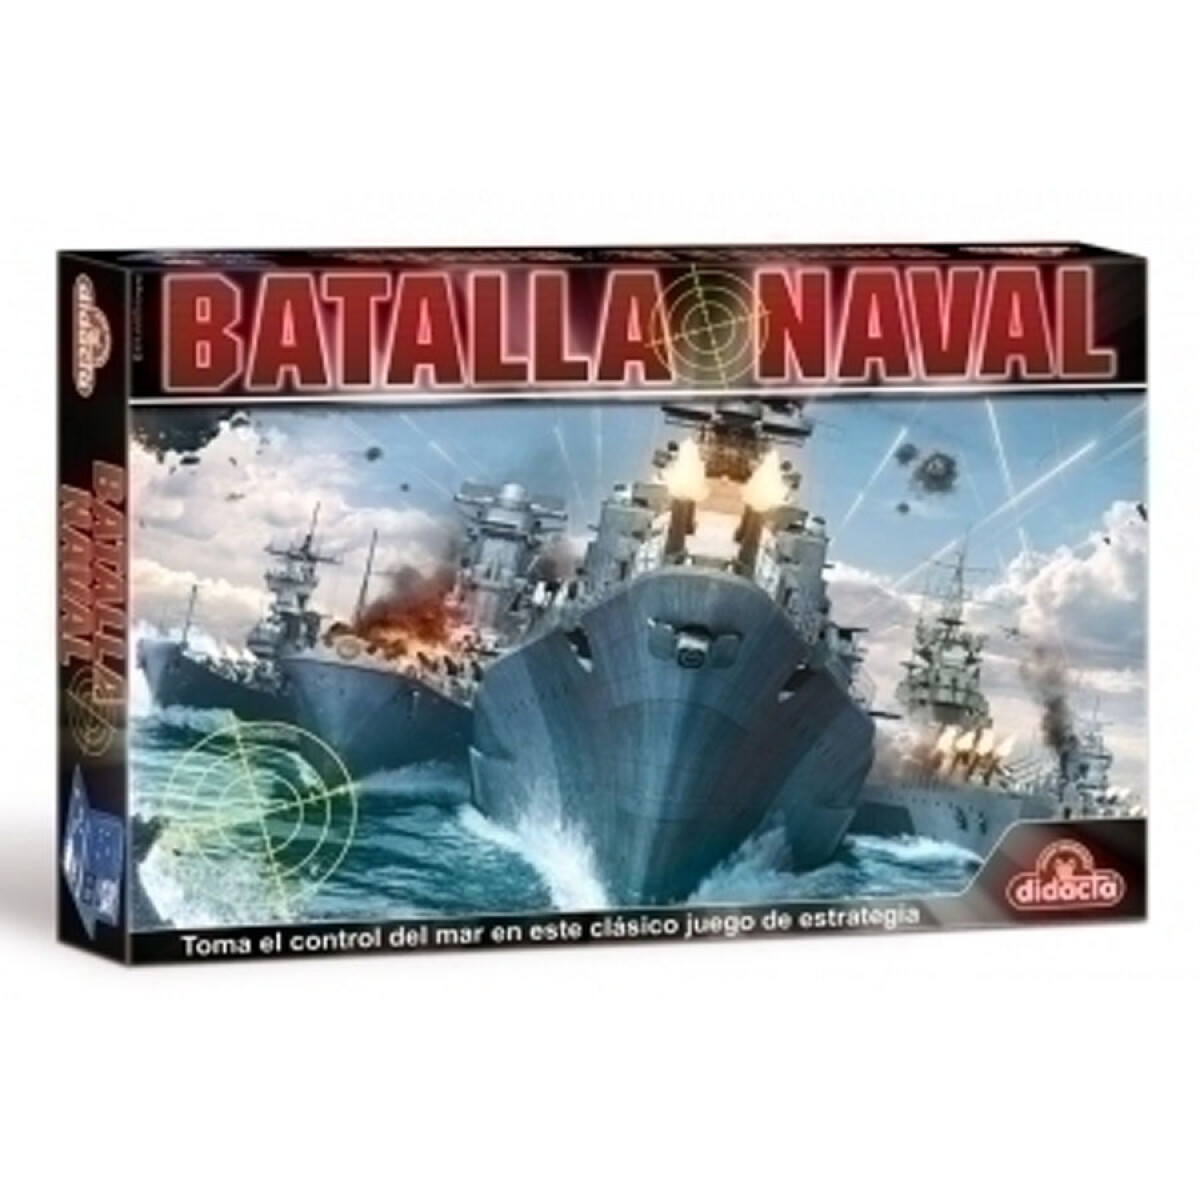 Juego de Mesa Batalla Naval Didacta - 001 